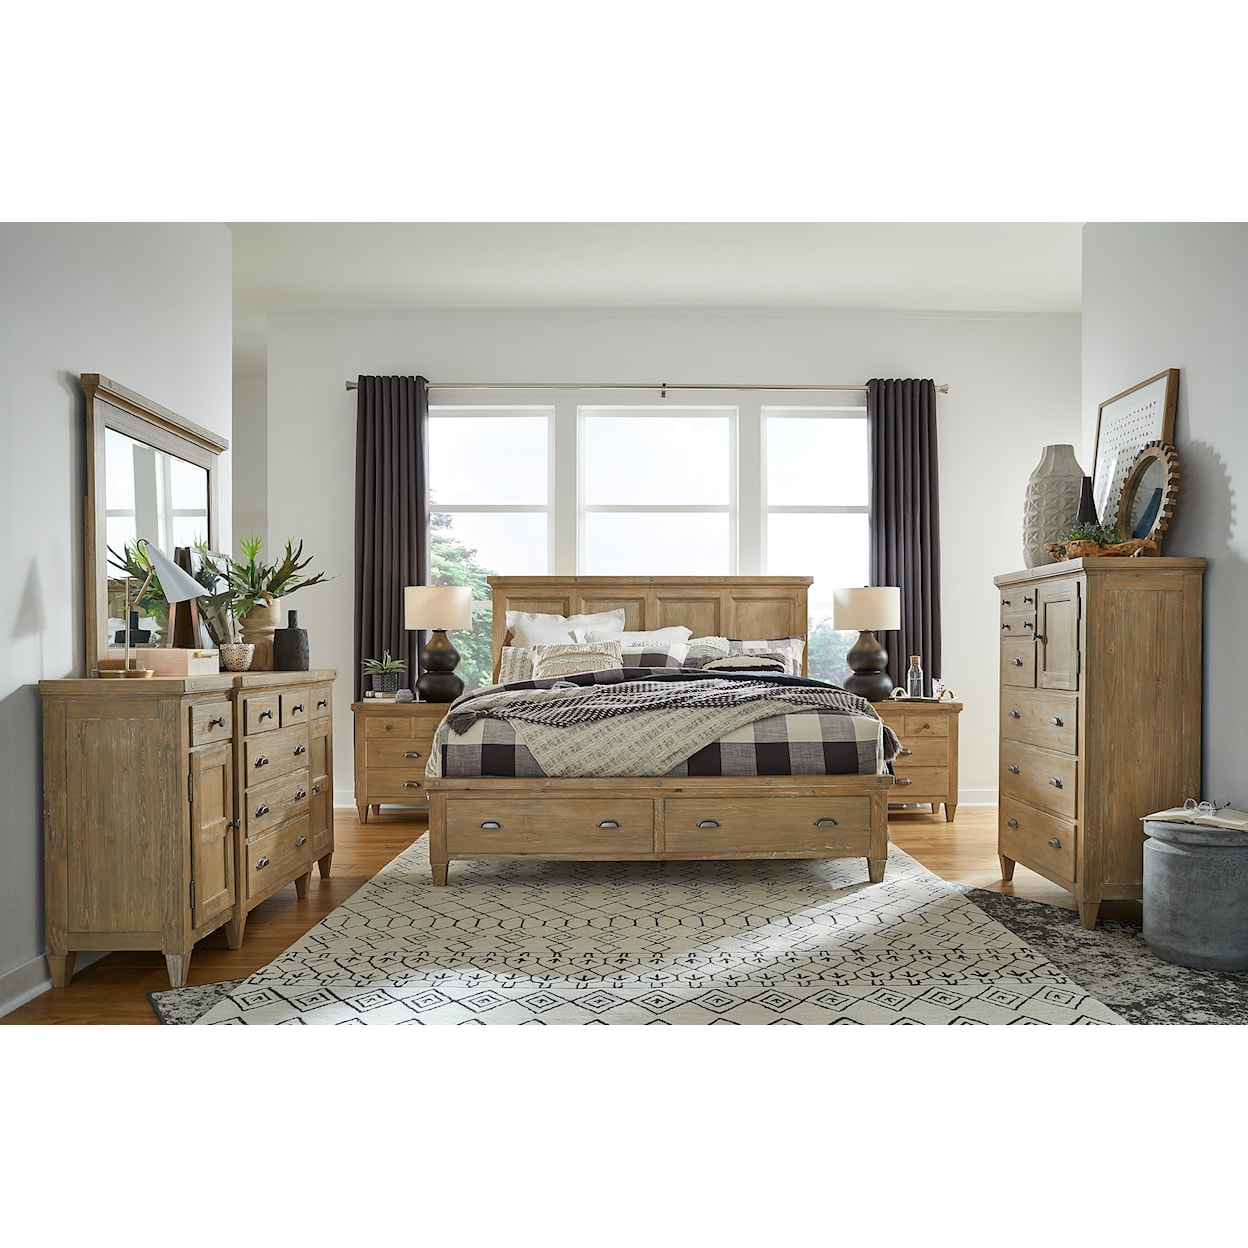 Magnussen Home Lynnfield Bedroom 3-Drawer Nightstand